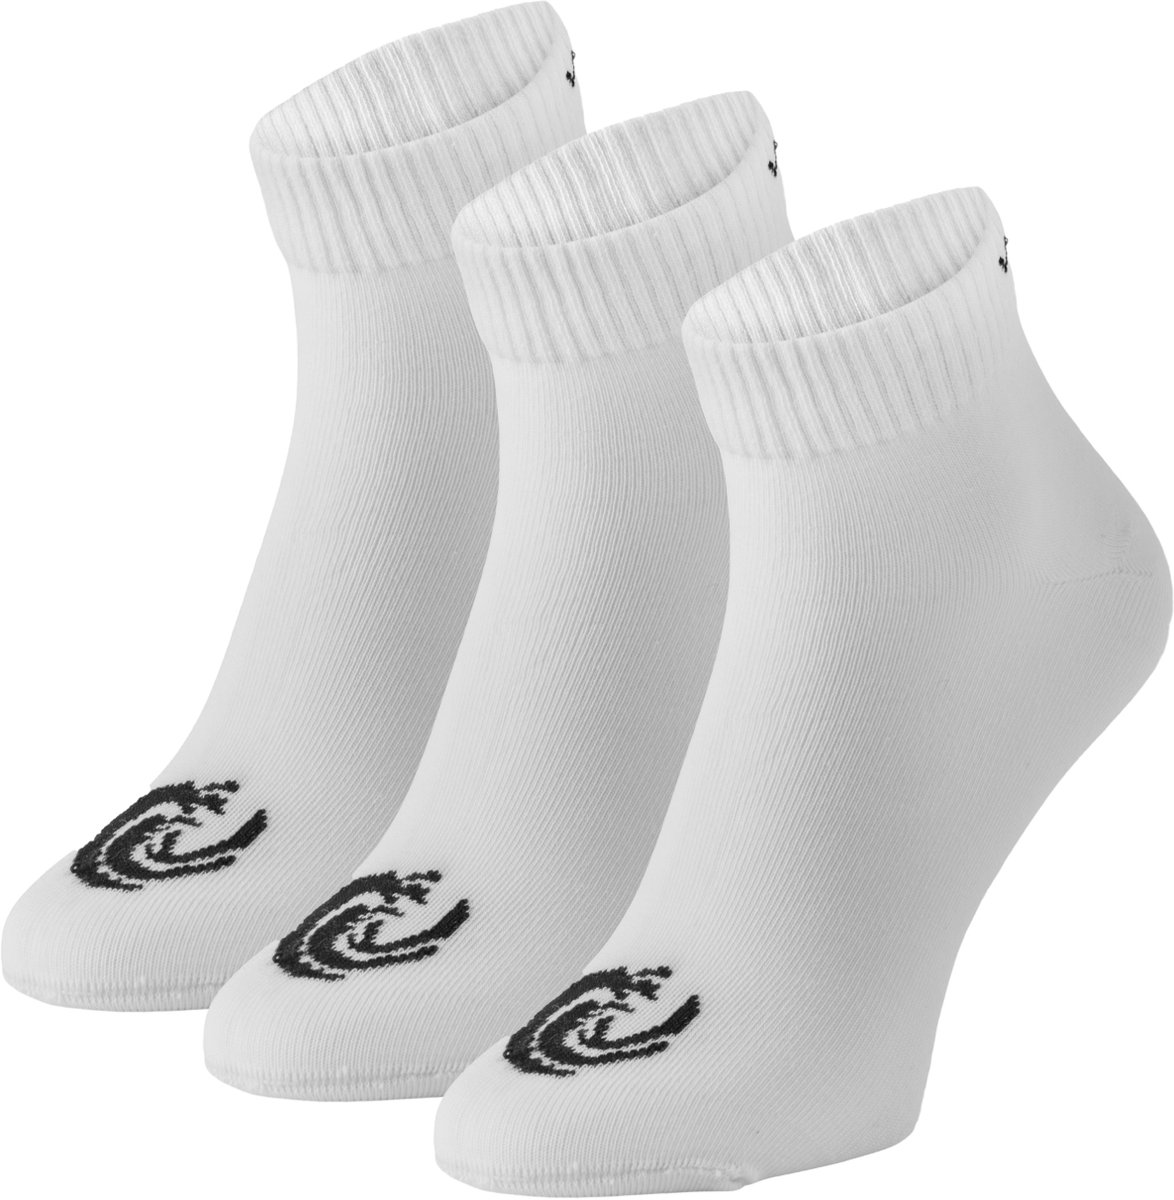 Vinnie-G Quarter Sokken Wit - 3 paar Witte Enkel sokken - Unisex - Maat 43/46